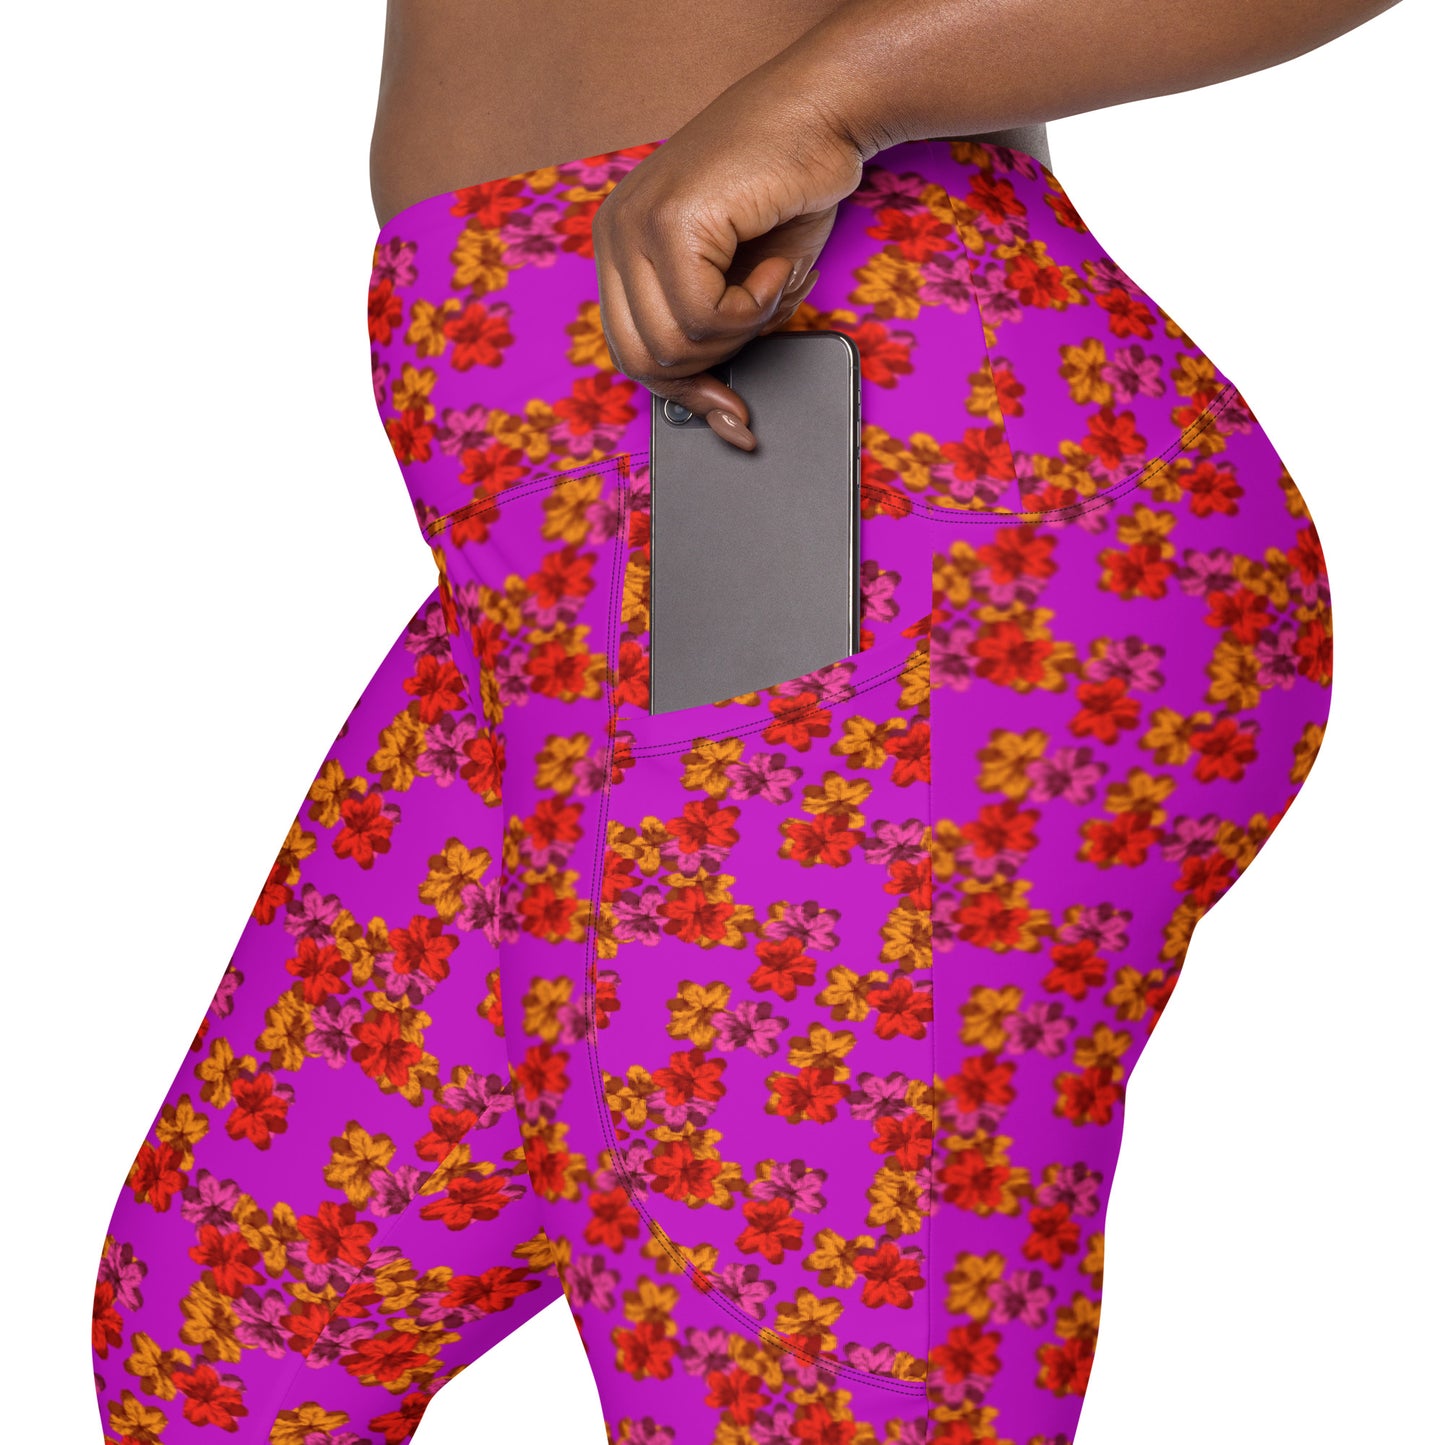 Alpenrose High Waist 7/8 Recycled Yoga Leggings / Pants with Pockets